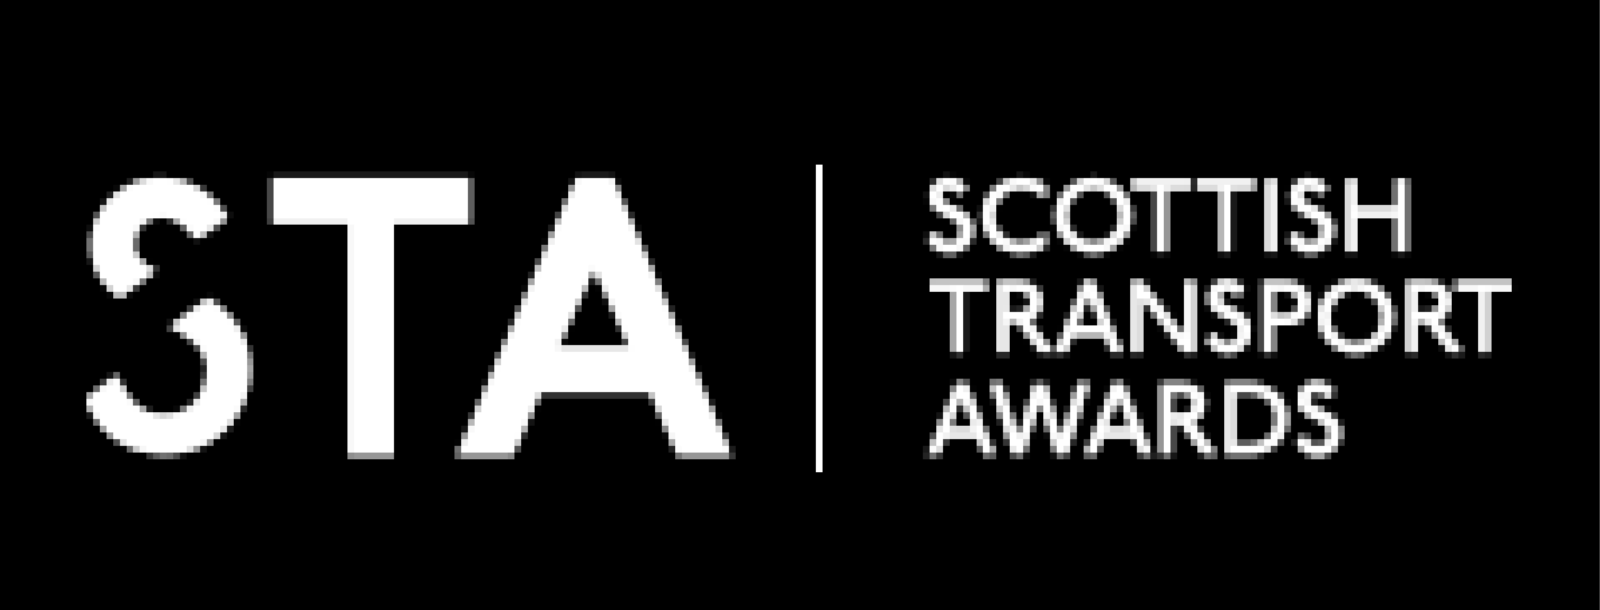 Scottish Transport Awards